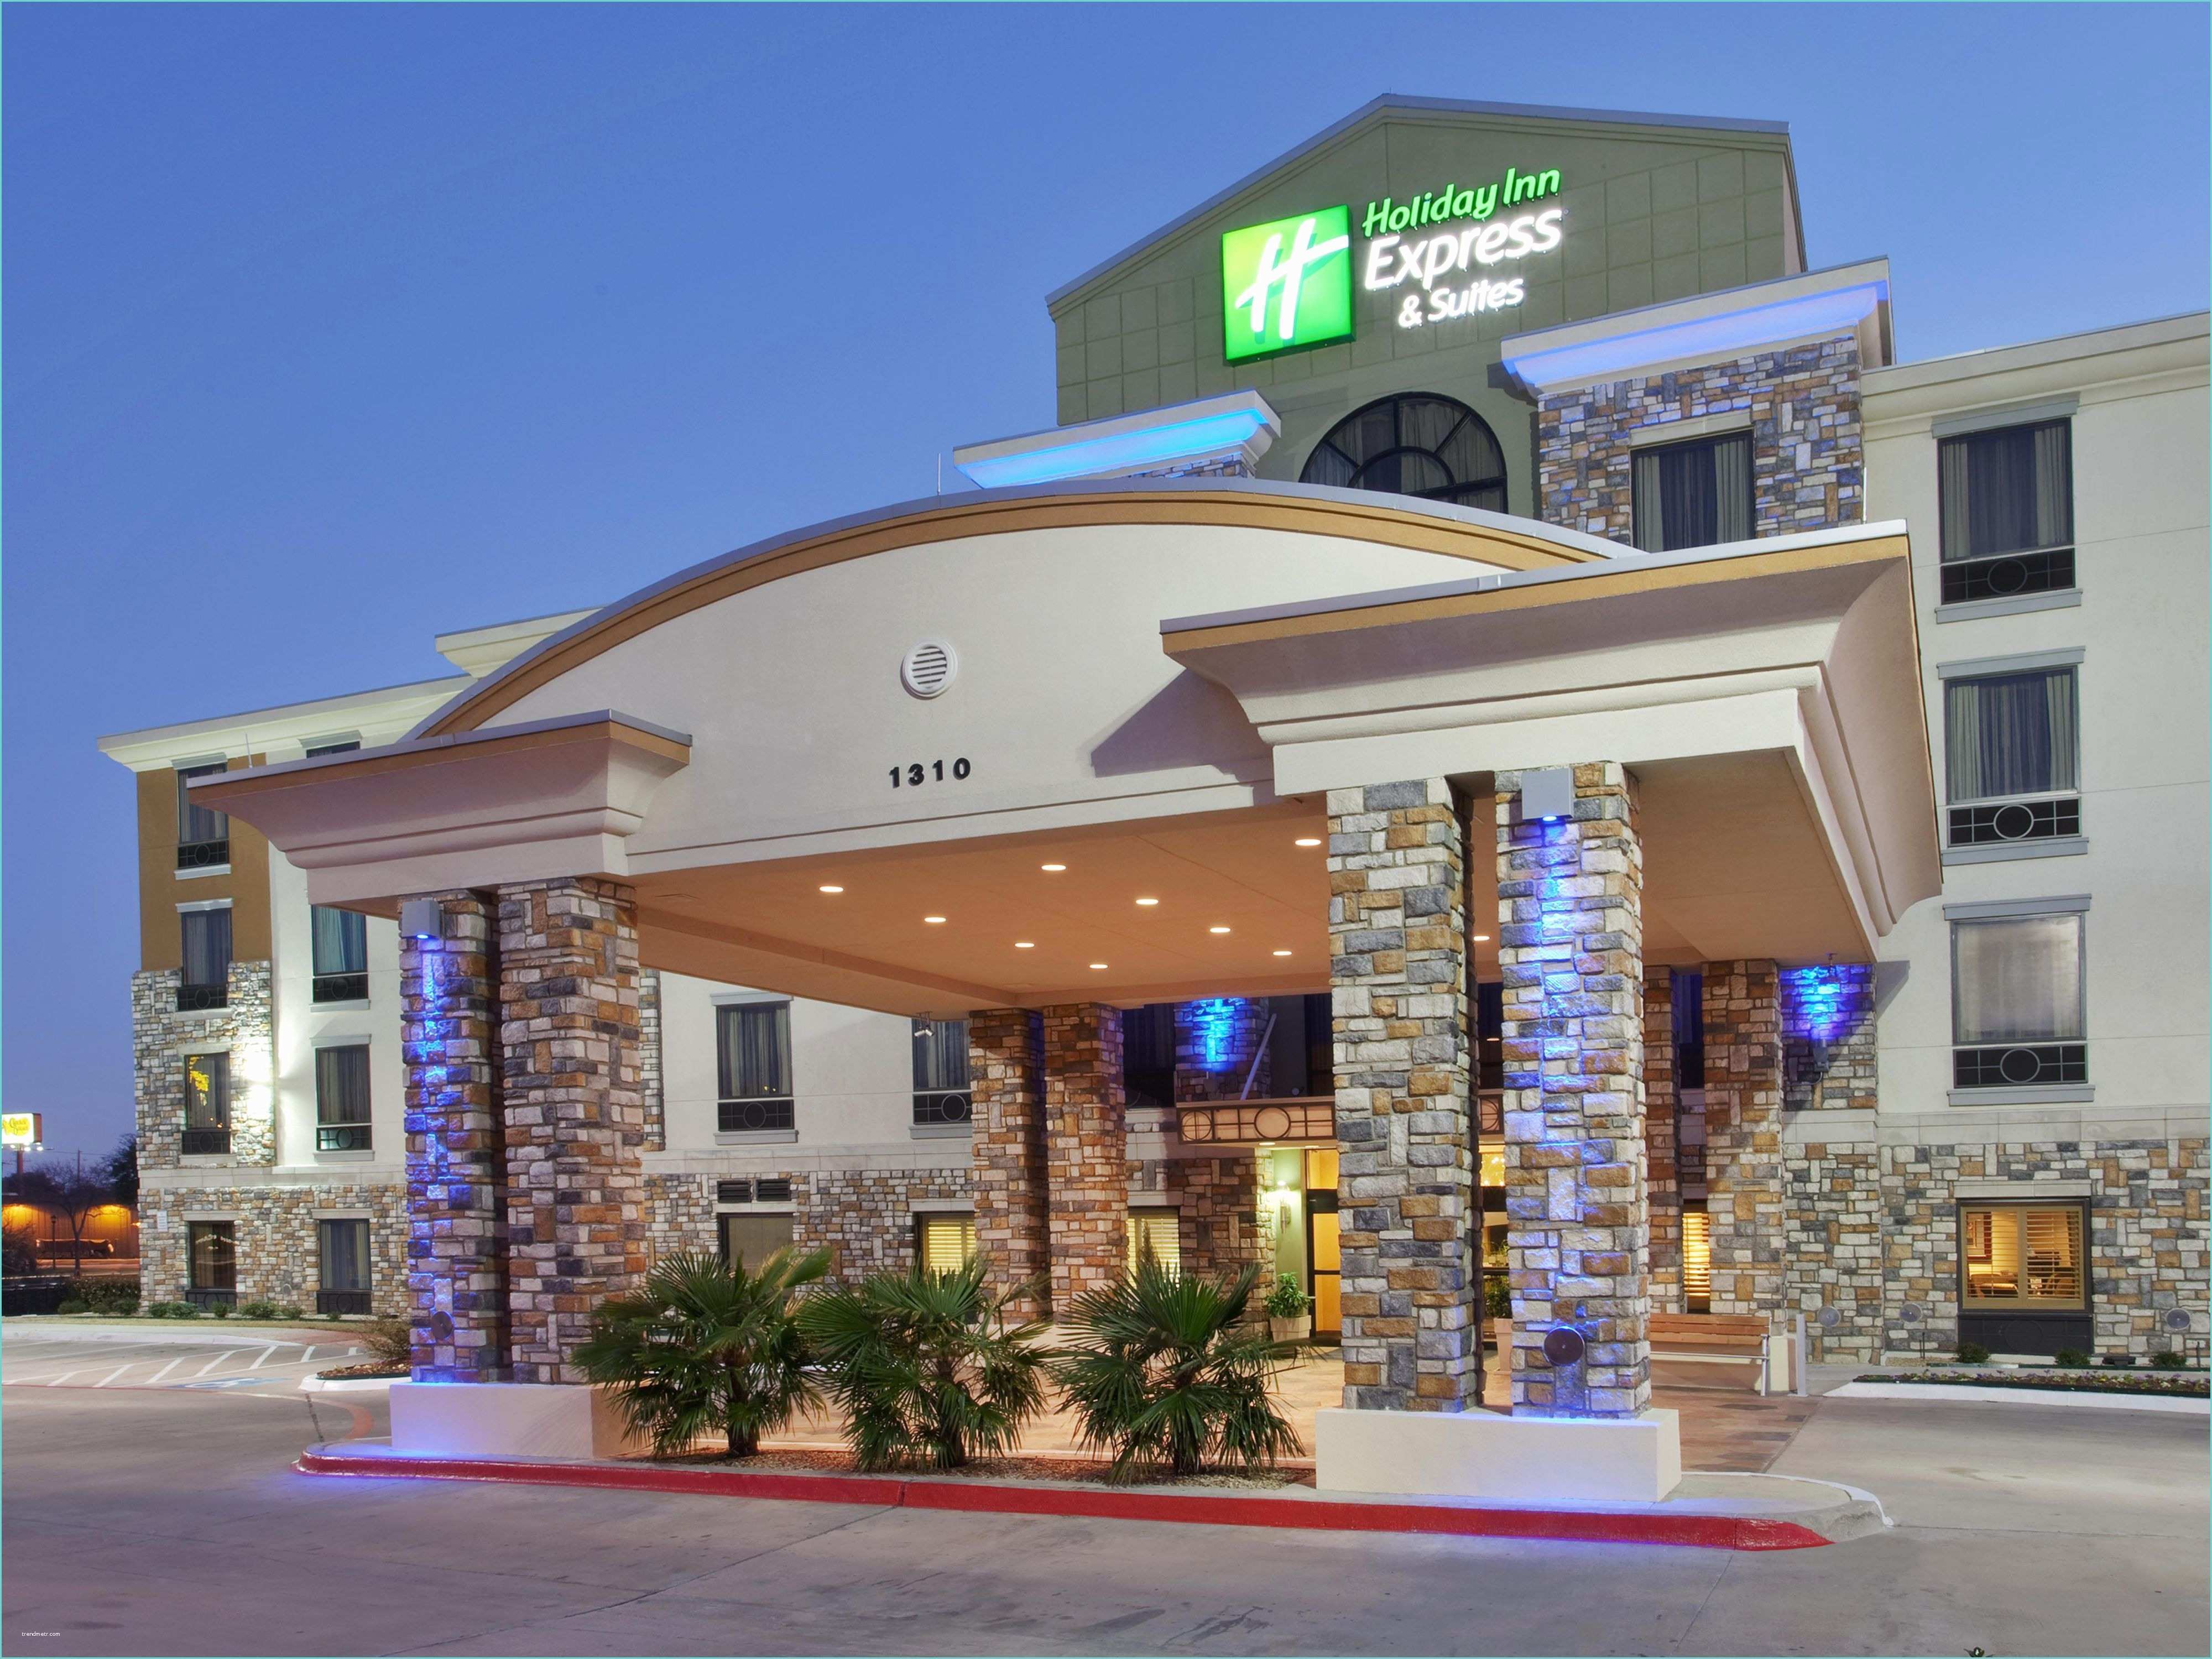 Seven Hotel Suite Lovez Vous Holiday Inn Express & Suites Dallas south Desoto Hotel